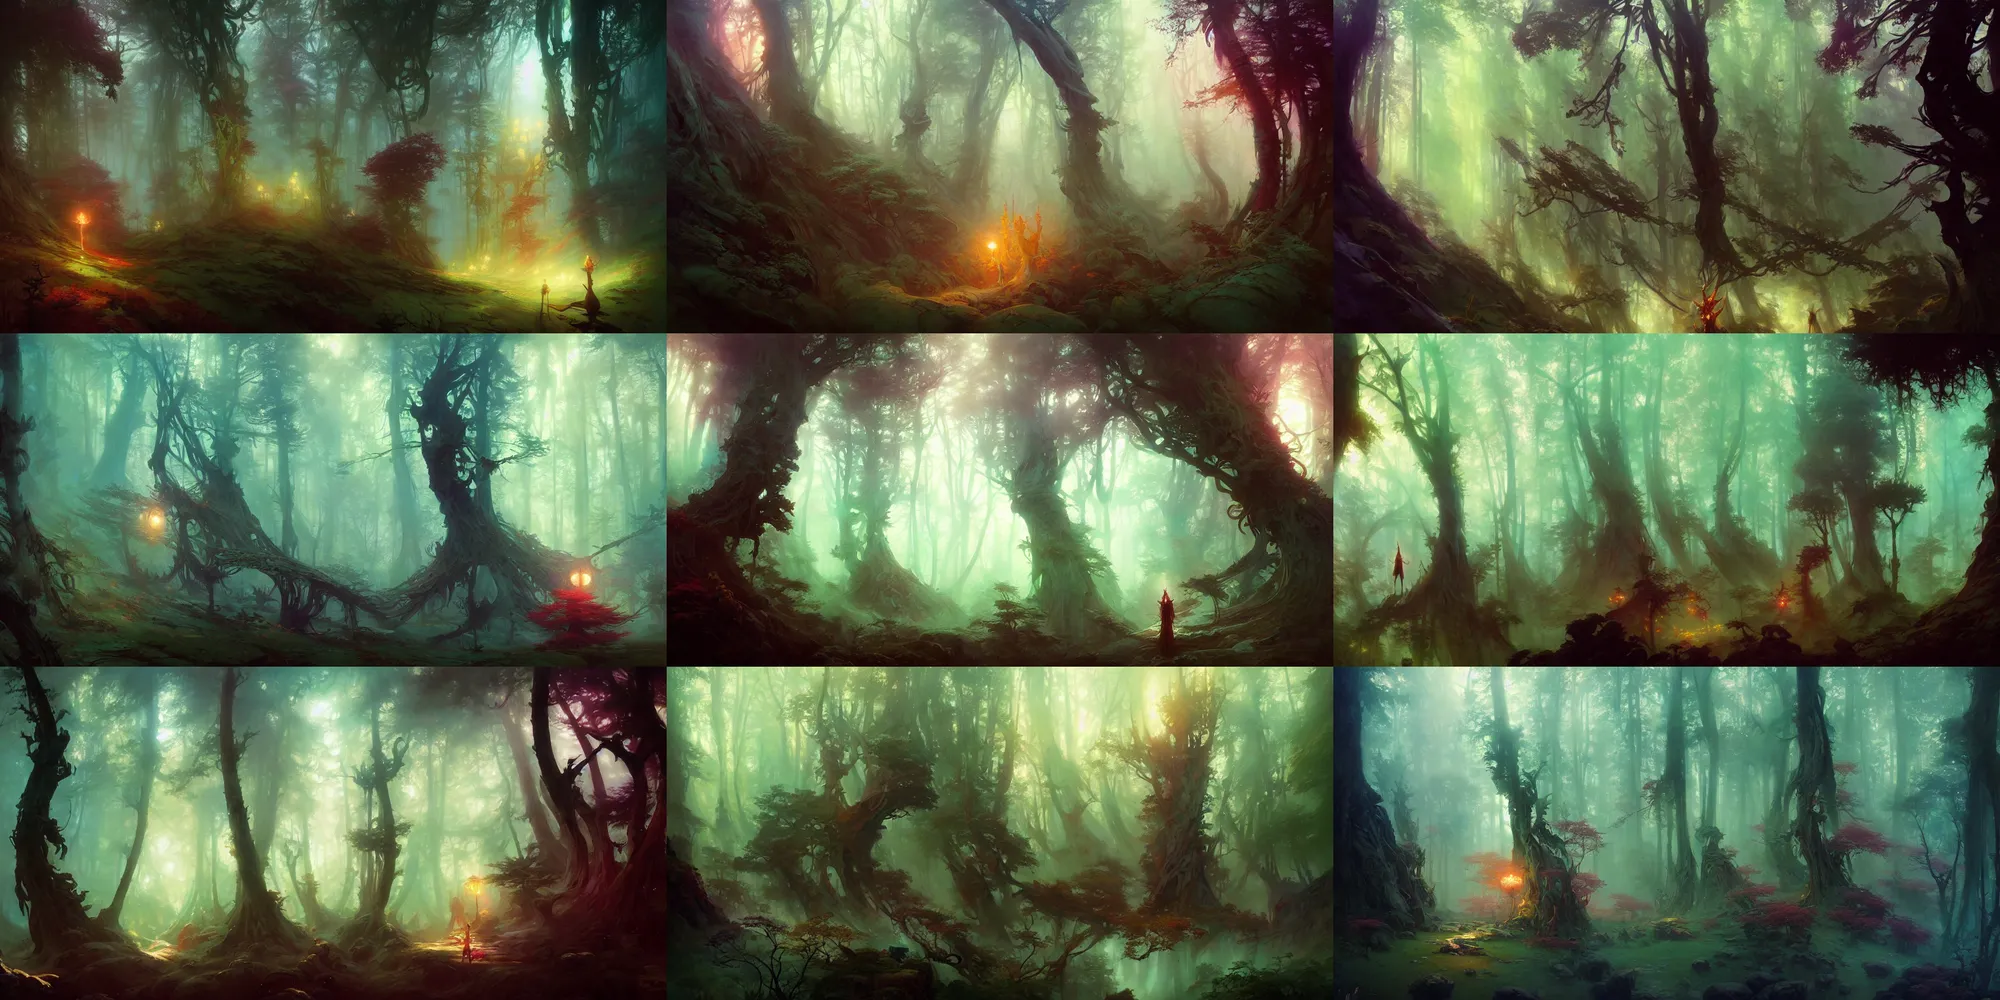 Prompt: mystical forest, fantasy, art by finnian macmanus, ross tran, peter mohrbacher, ruan jia, reza afshar, ivan aivazovsky, marc simonetti, victo ngai, alphonse mucha